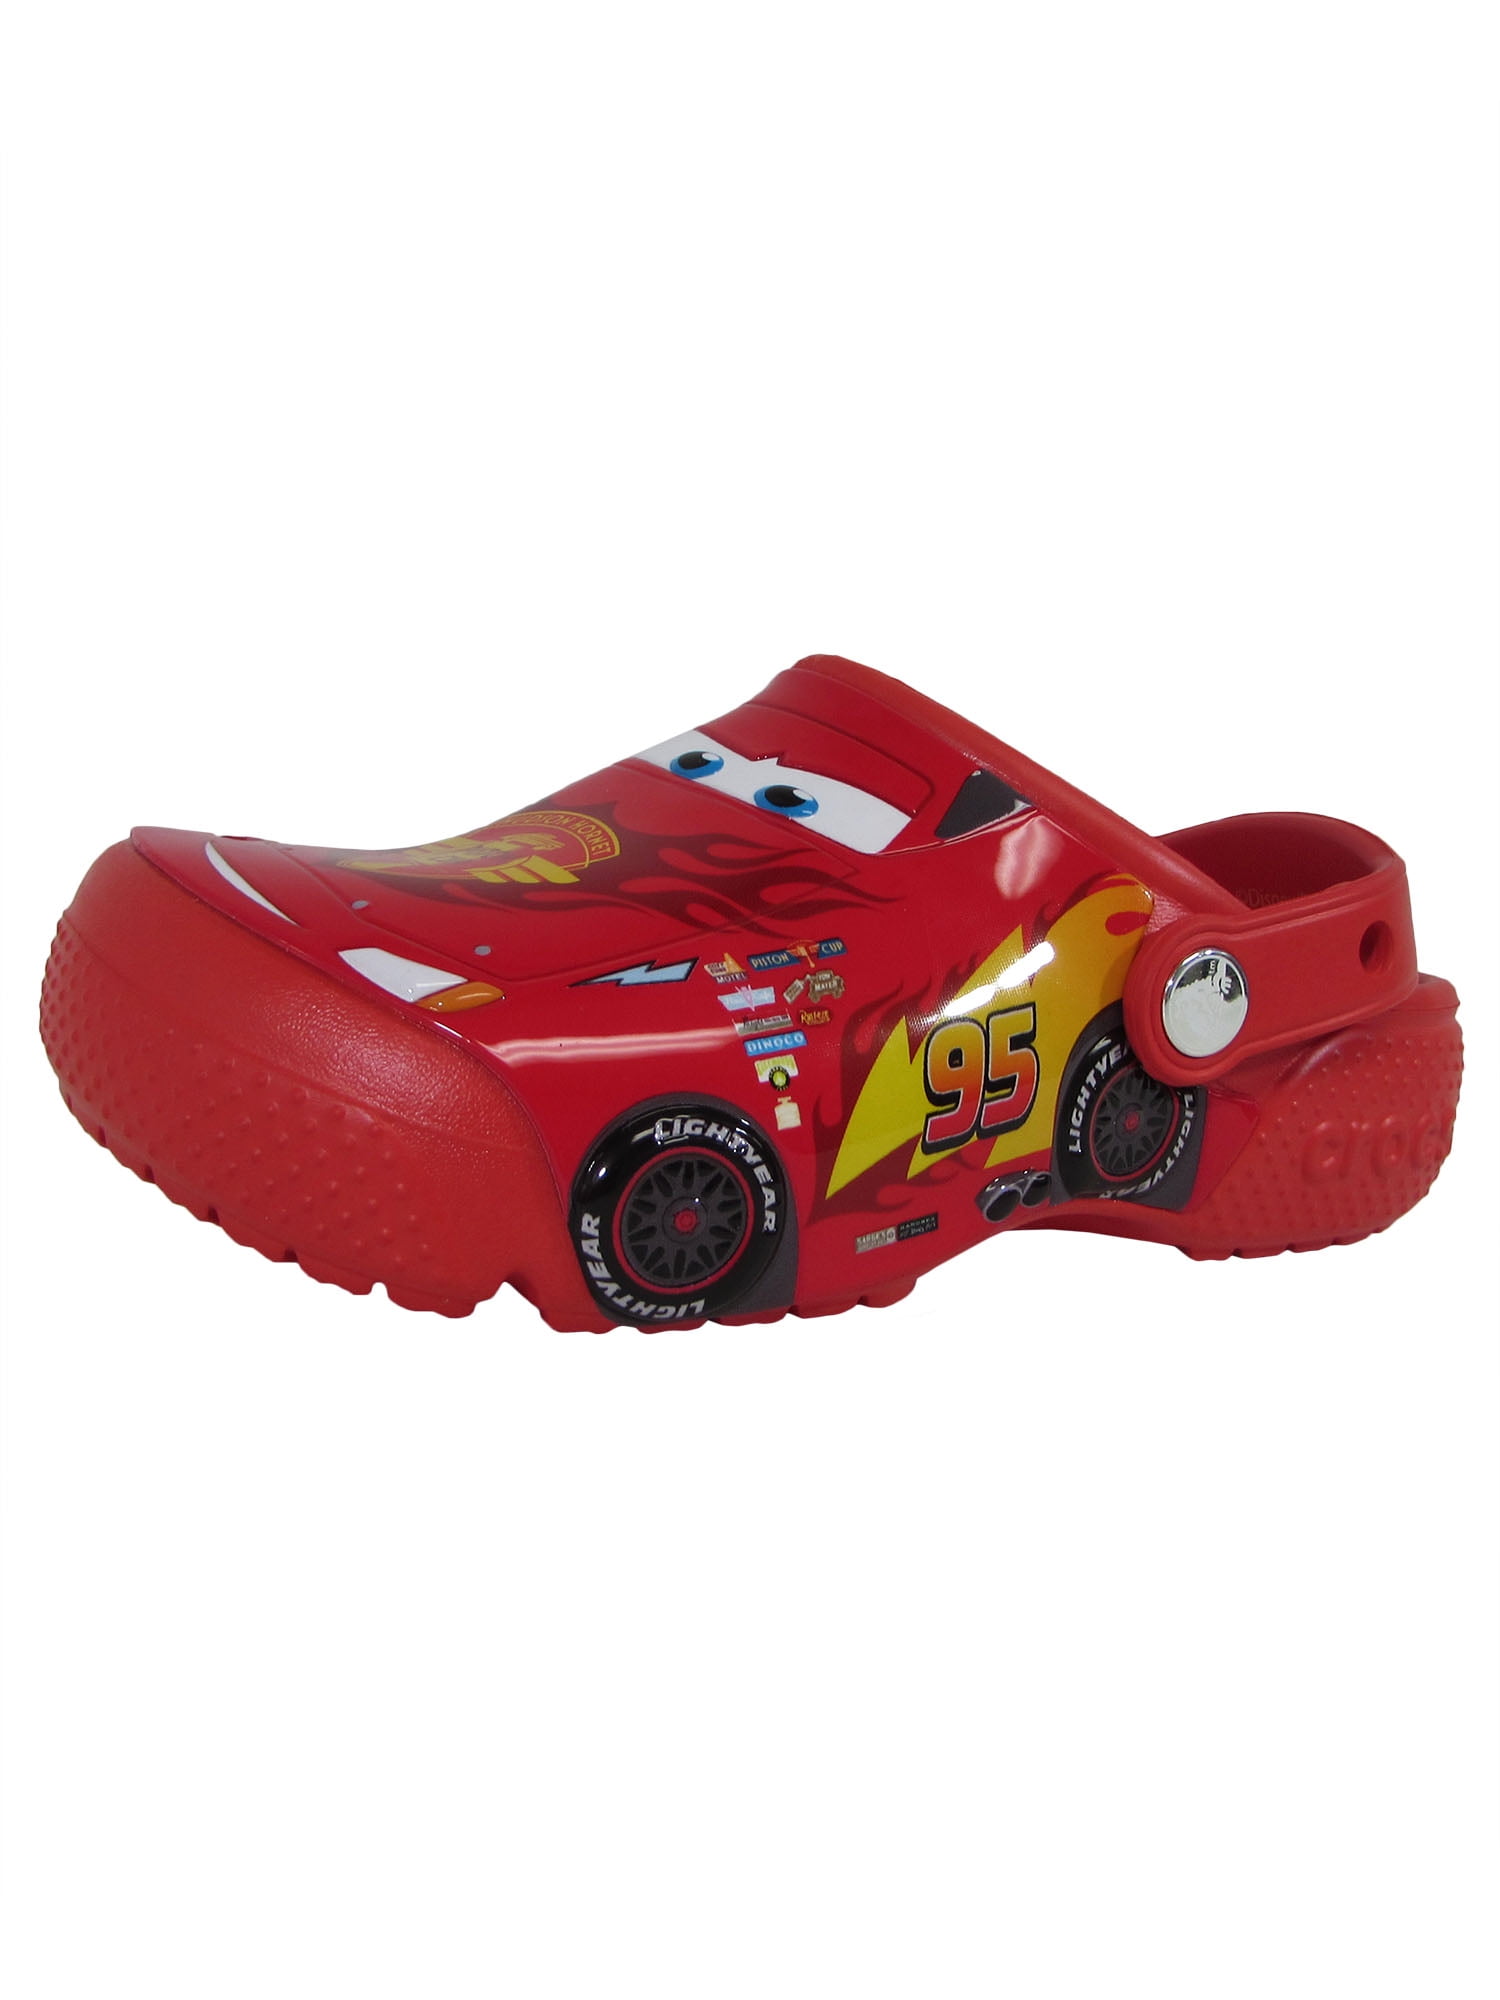  Crocs Kids Disney Cars Mater Classic Clogs, 4 US Unisex  Toddler